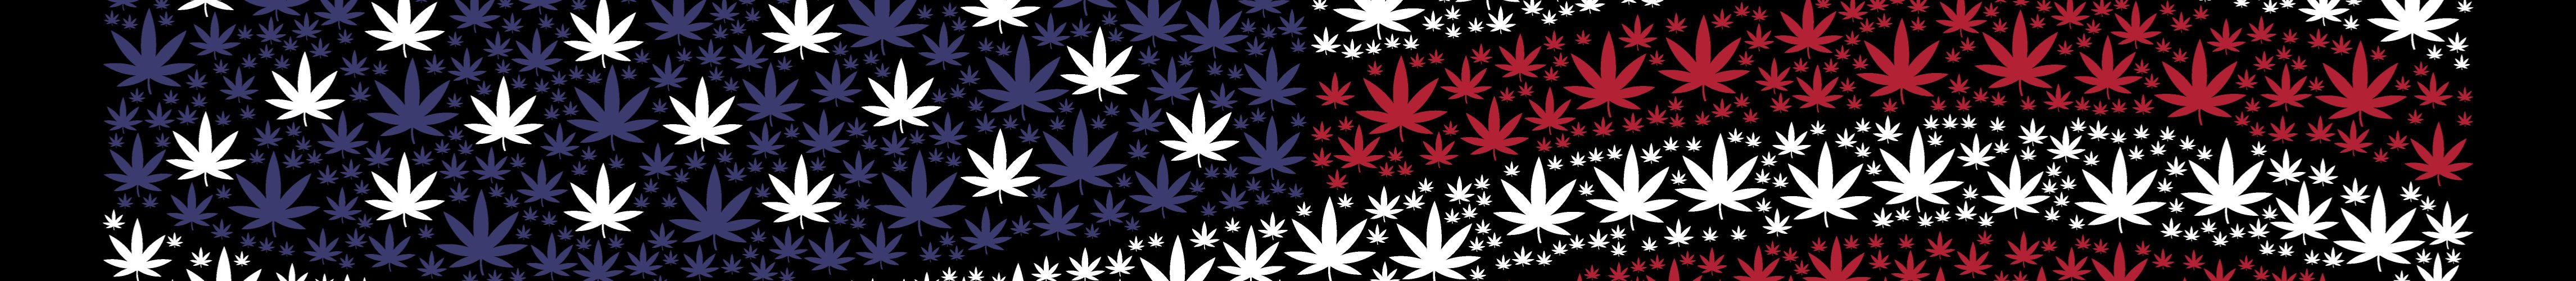 cannabis trends america